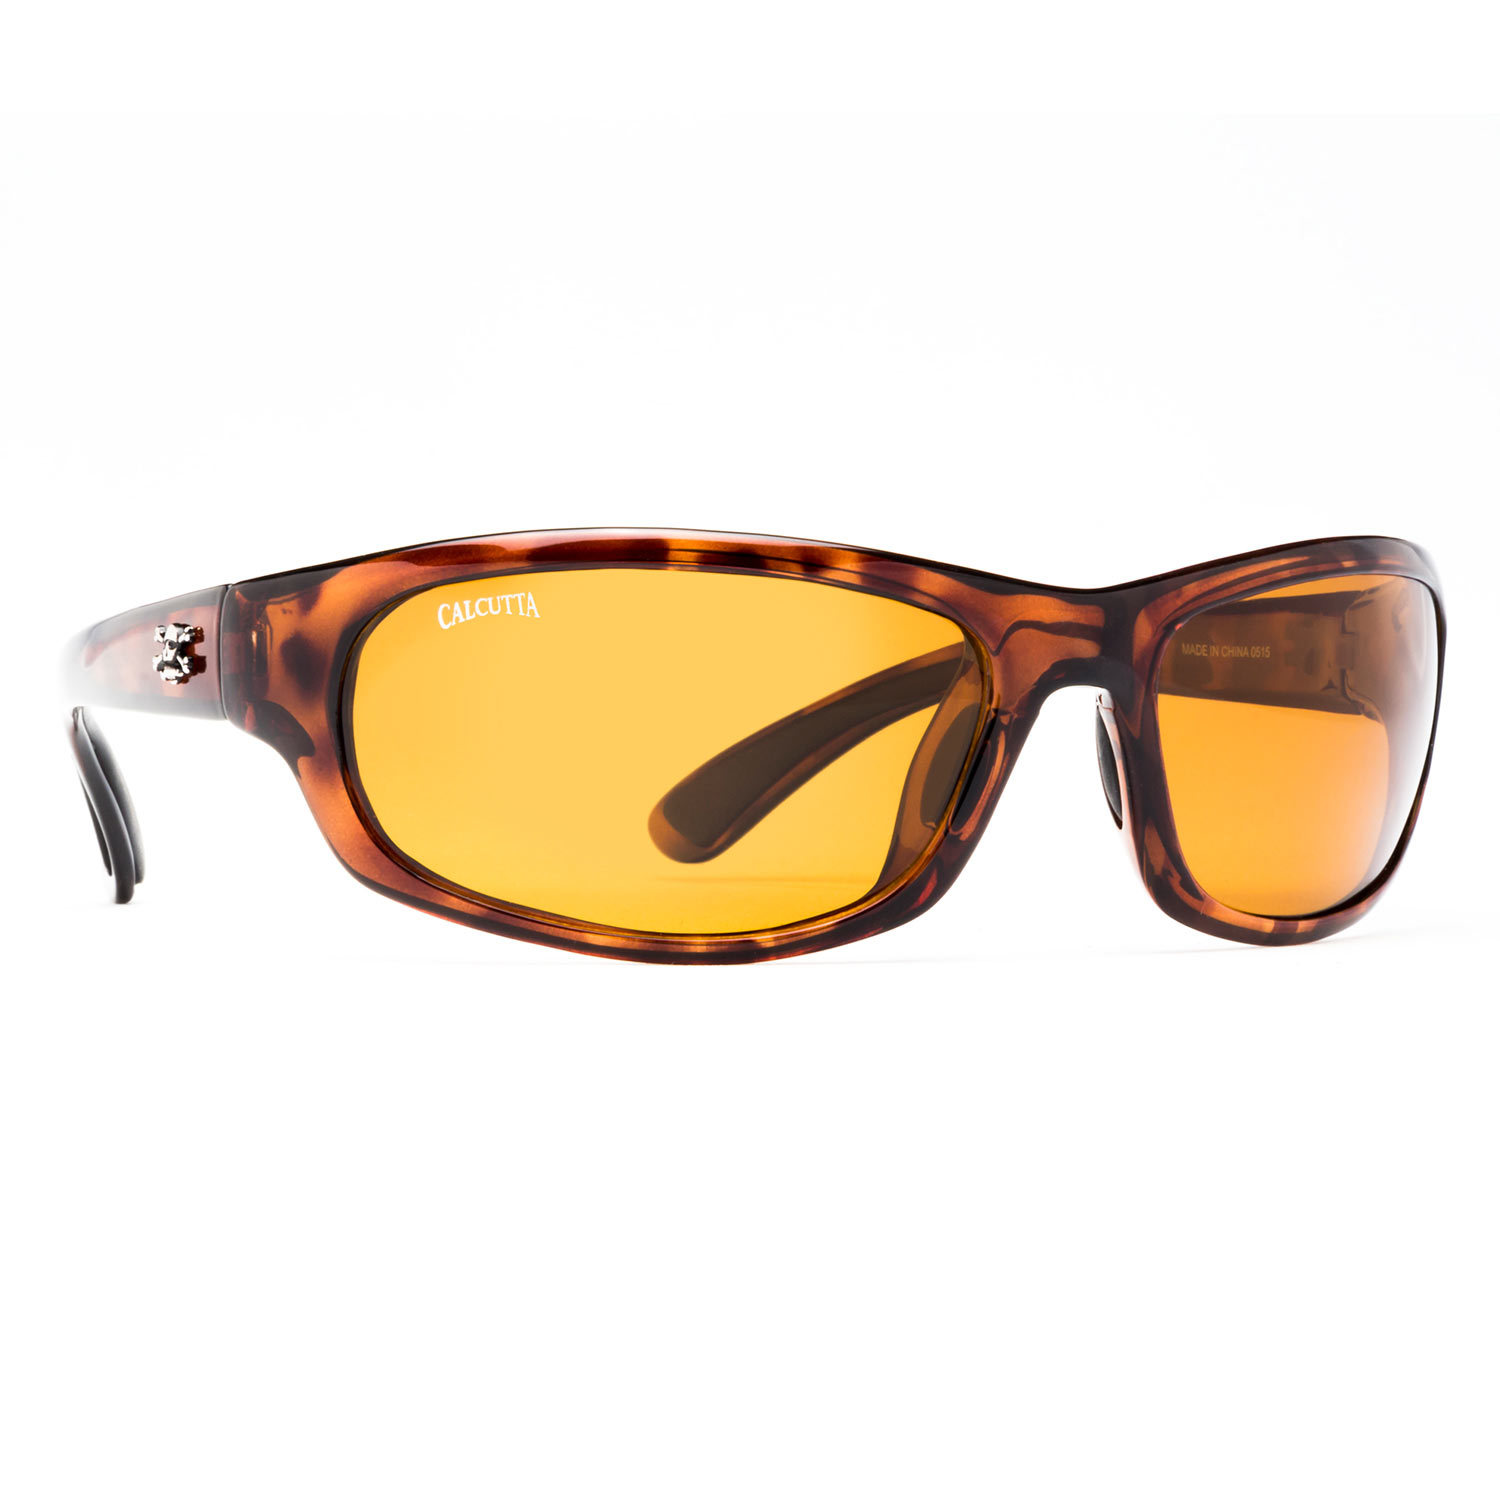 CALCUTTA Men's Steelhead Sunglasses